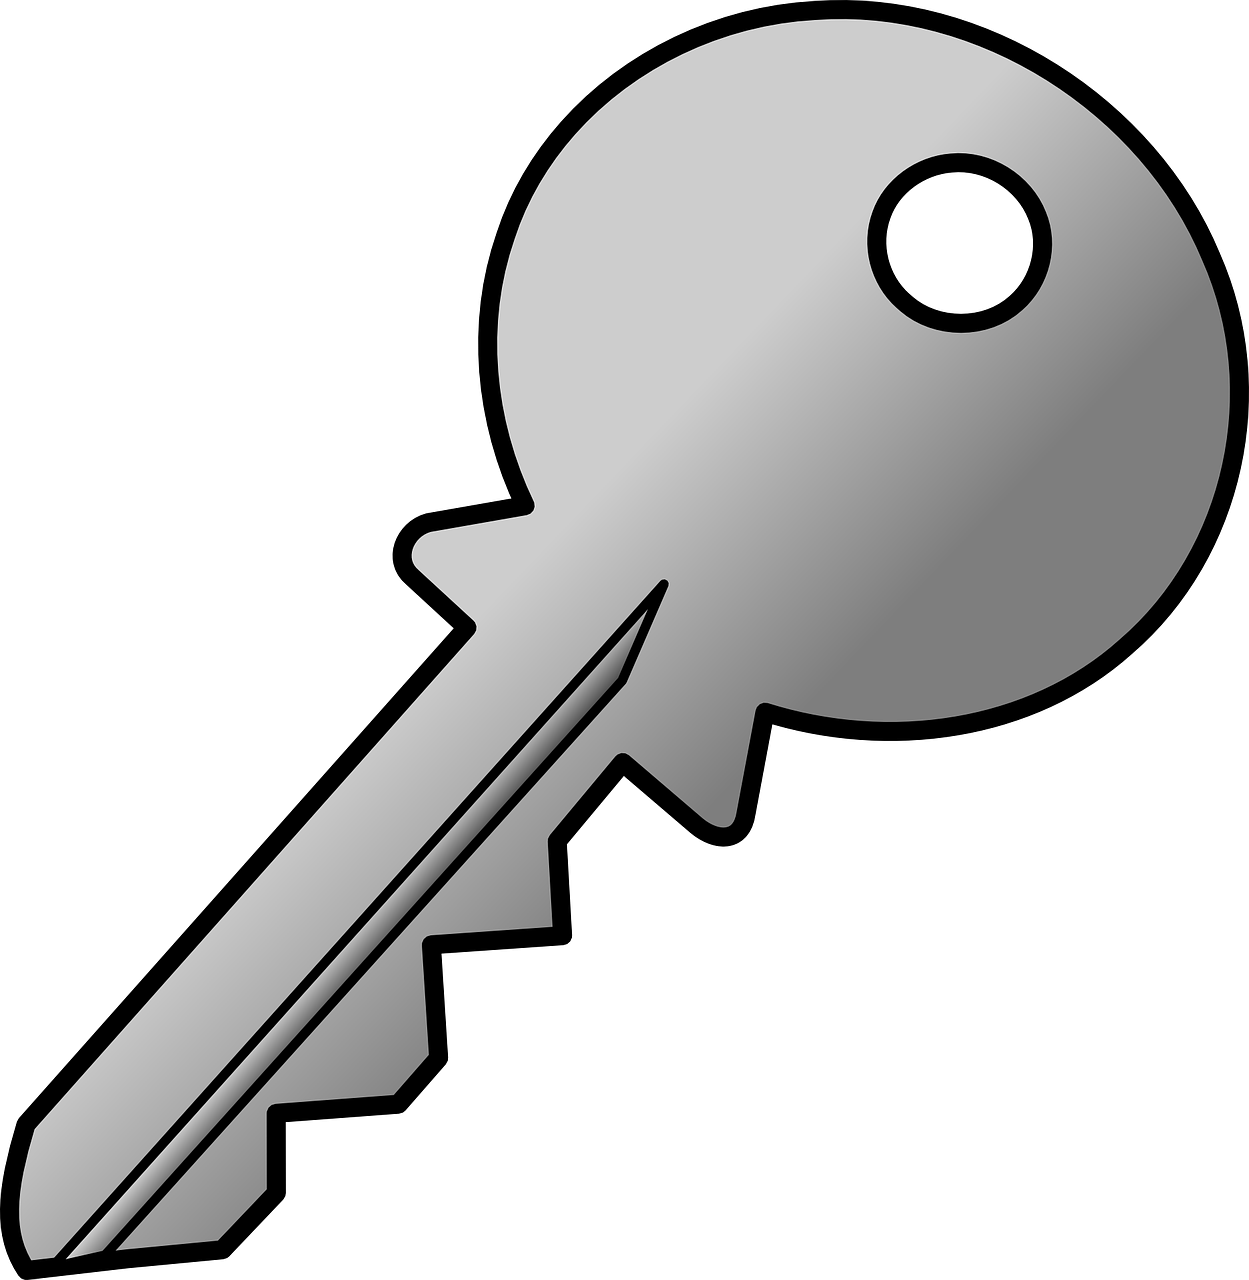 Ключ. Изображение ключа. Ключ нарисованный. Ключ вектор. Flat key